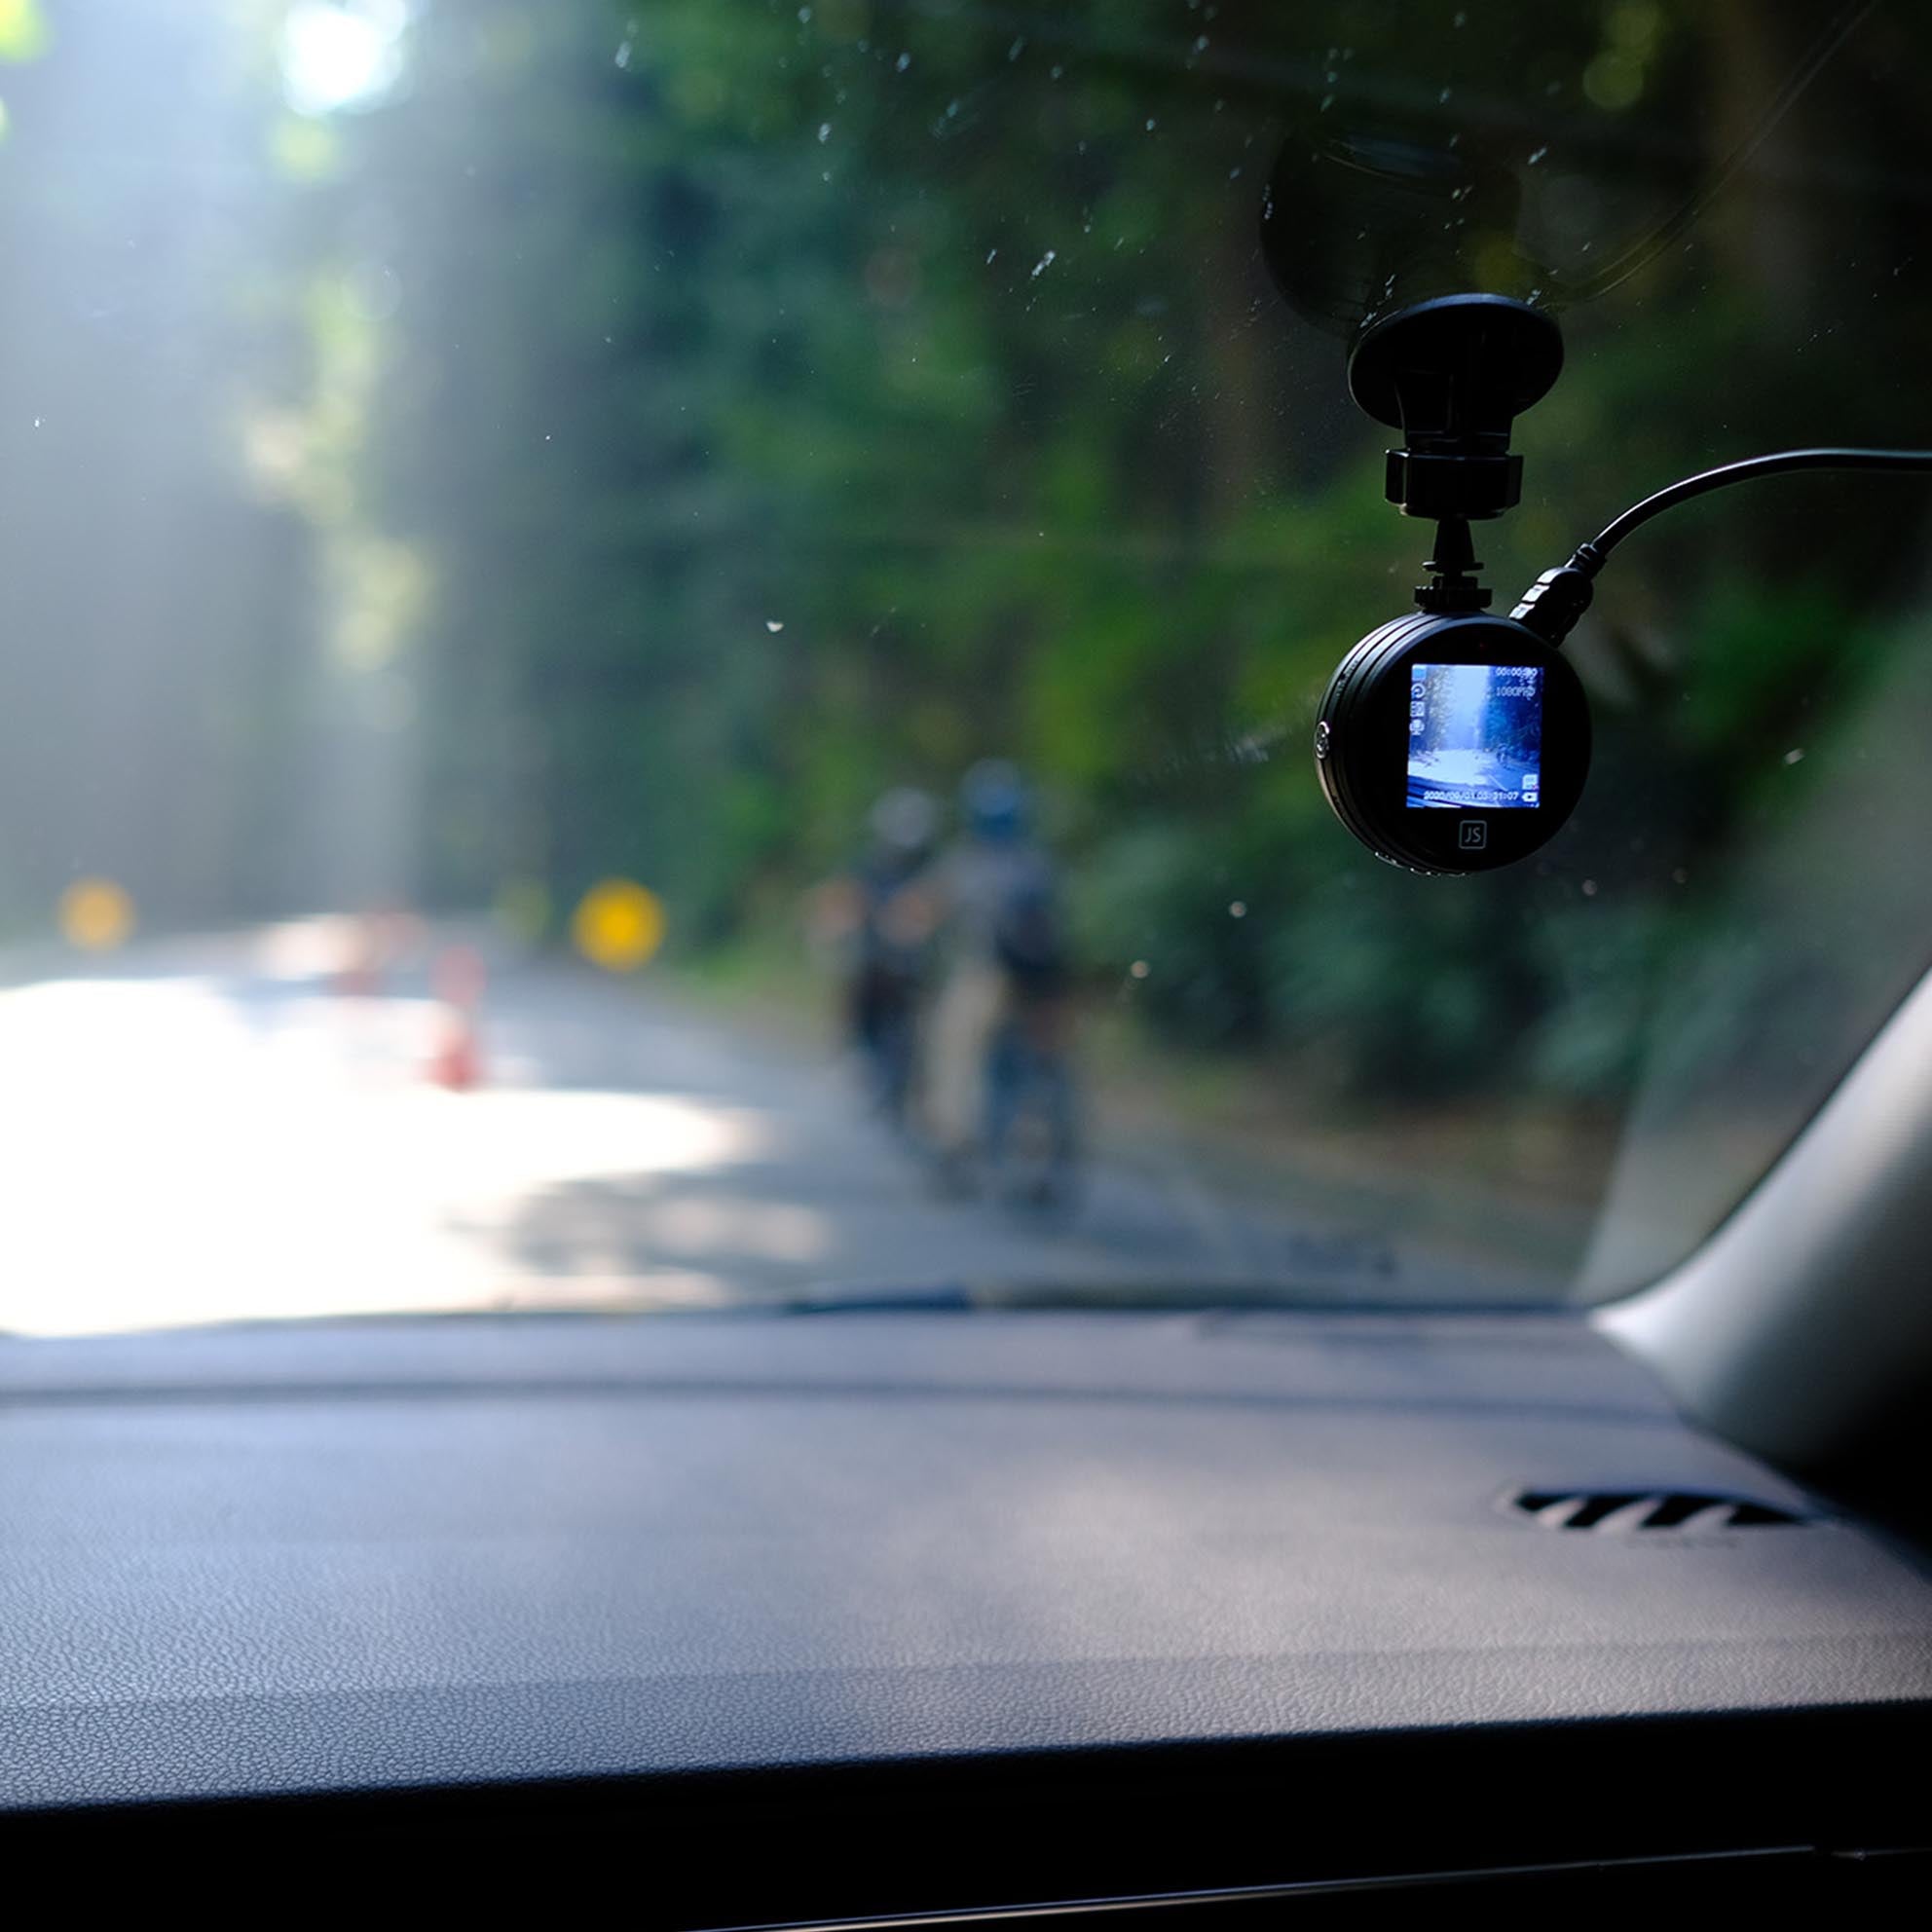 JS Dash Mini 2.0 - Plug and Play Car Dash Cam - Full HD 1080p Dashcam with G-Sensors